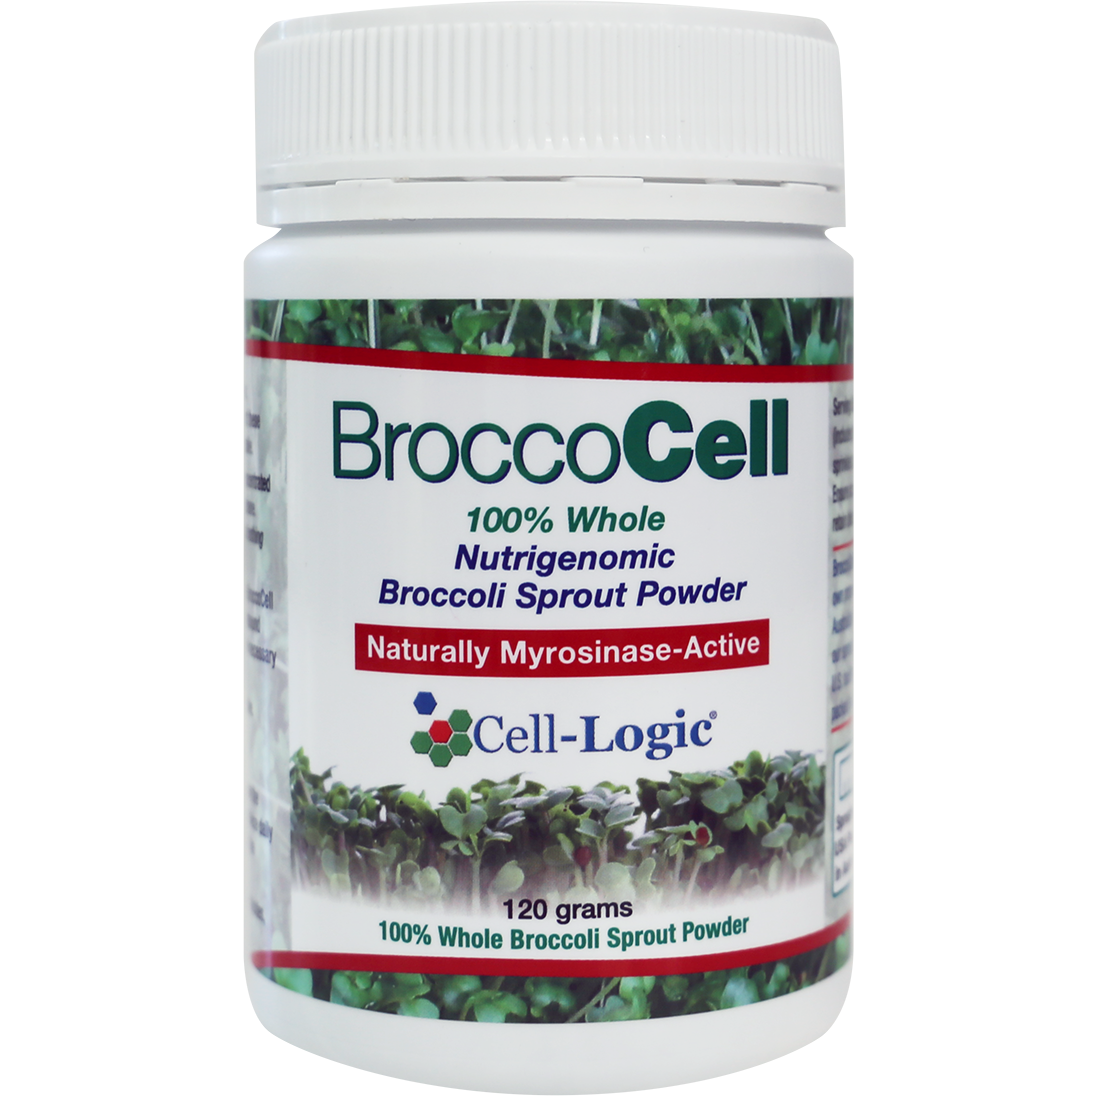 Enduracell Broccoli Sprout Powder 80g (brocolli sprout powder)